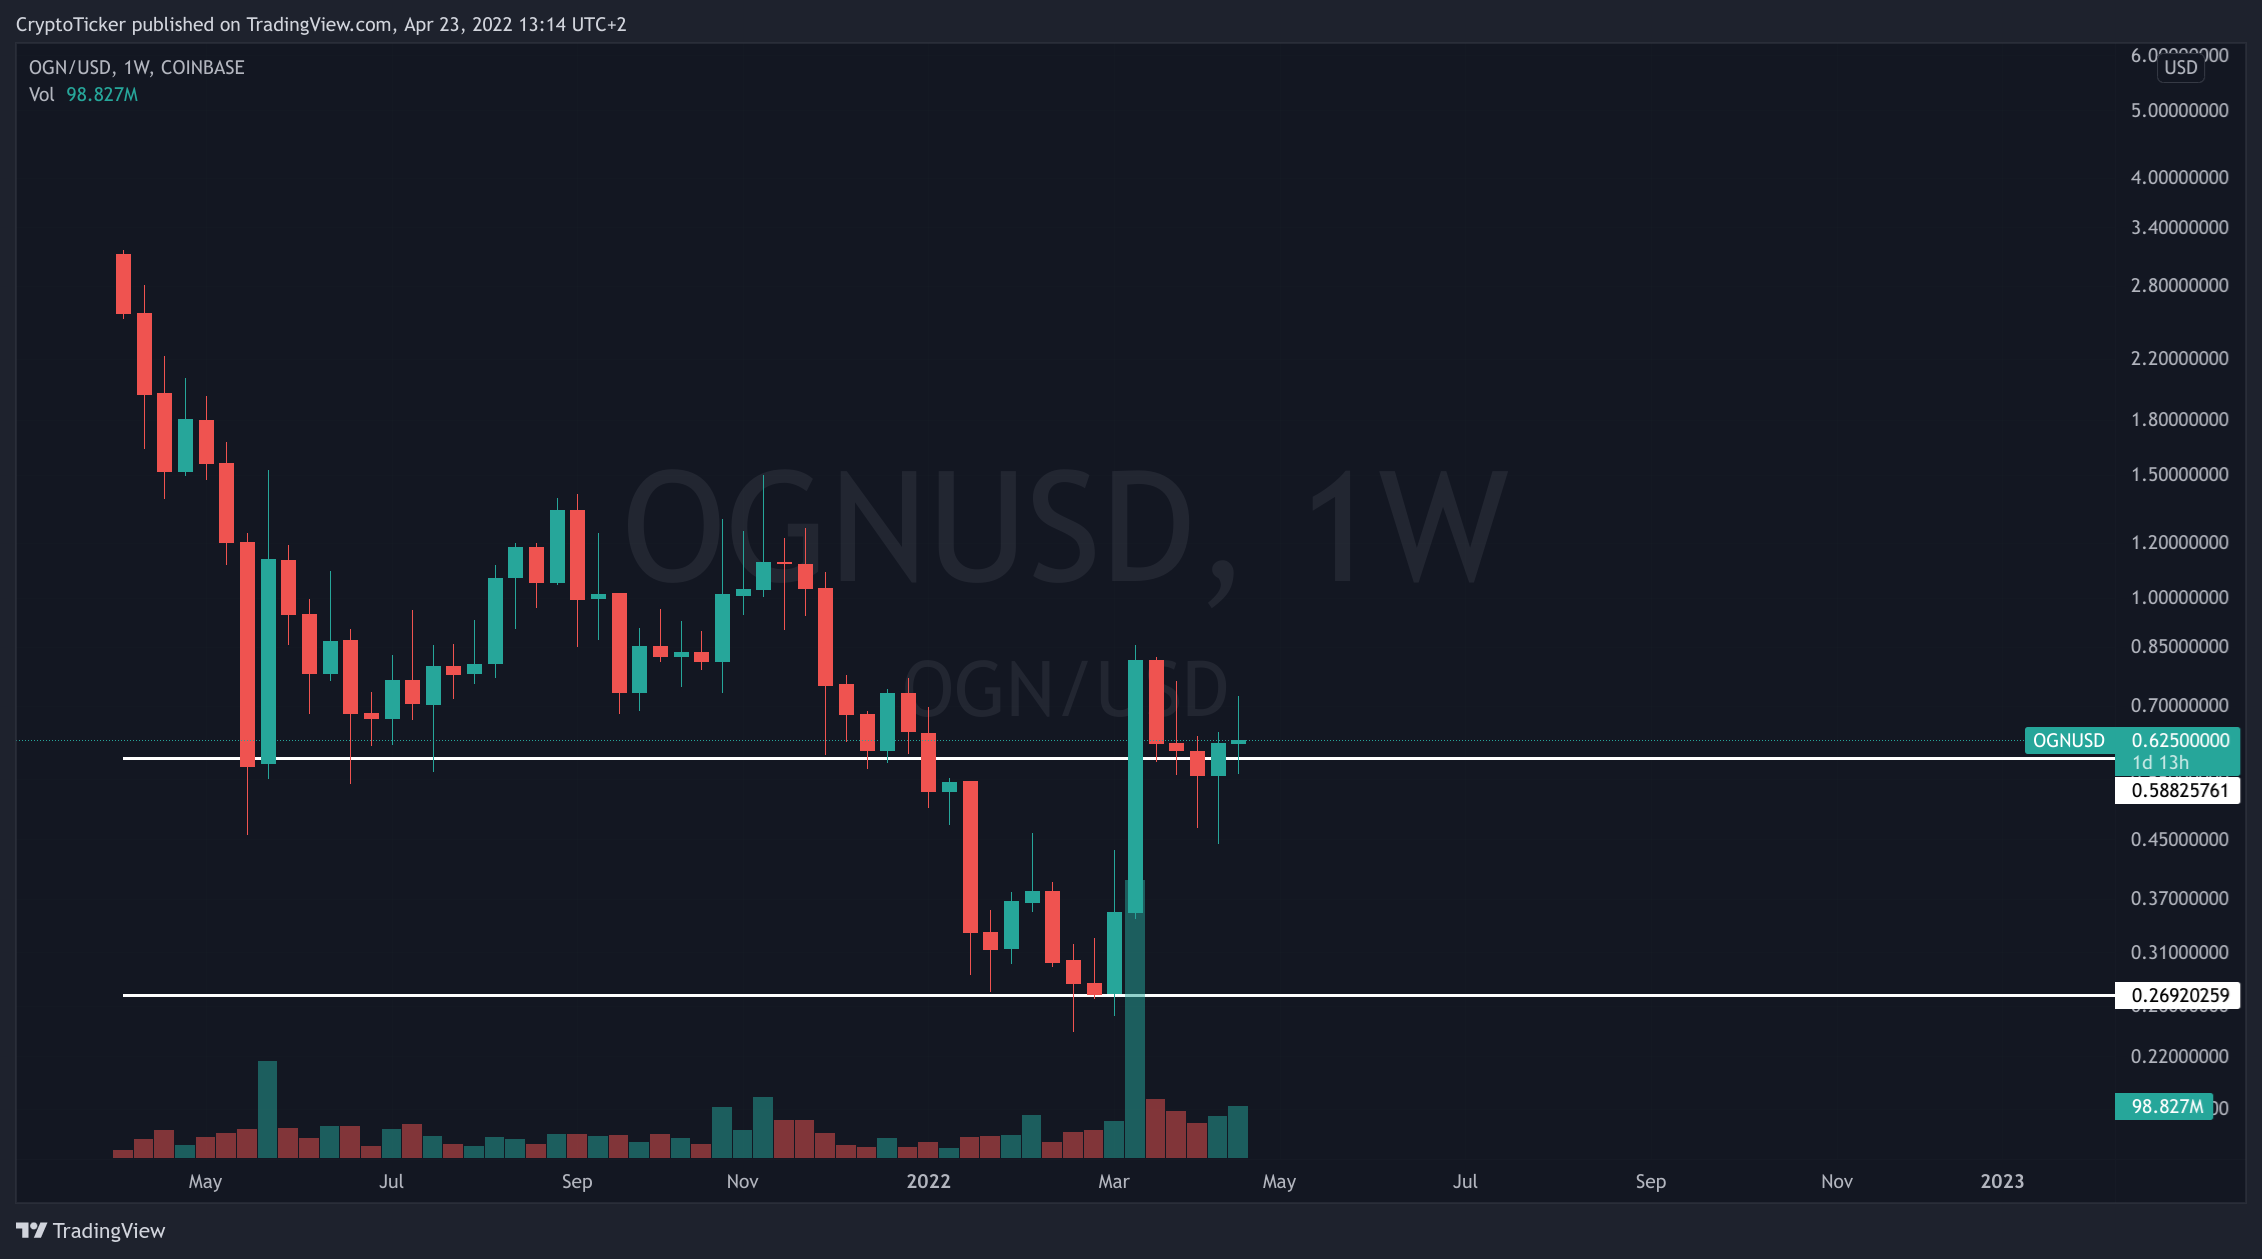 OGN/USD 1-week chart 